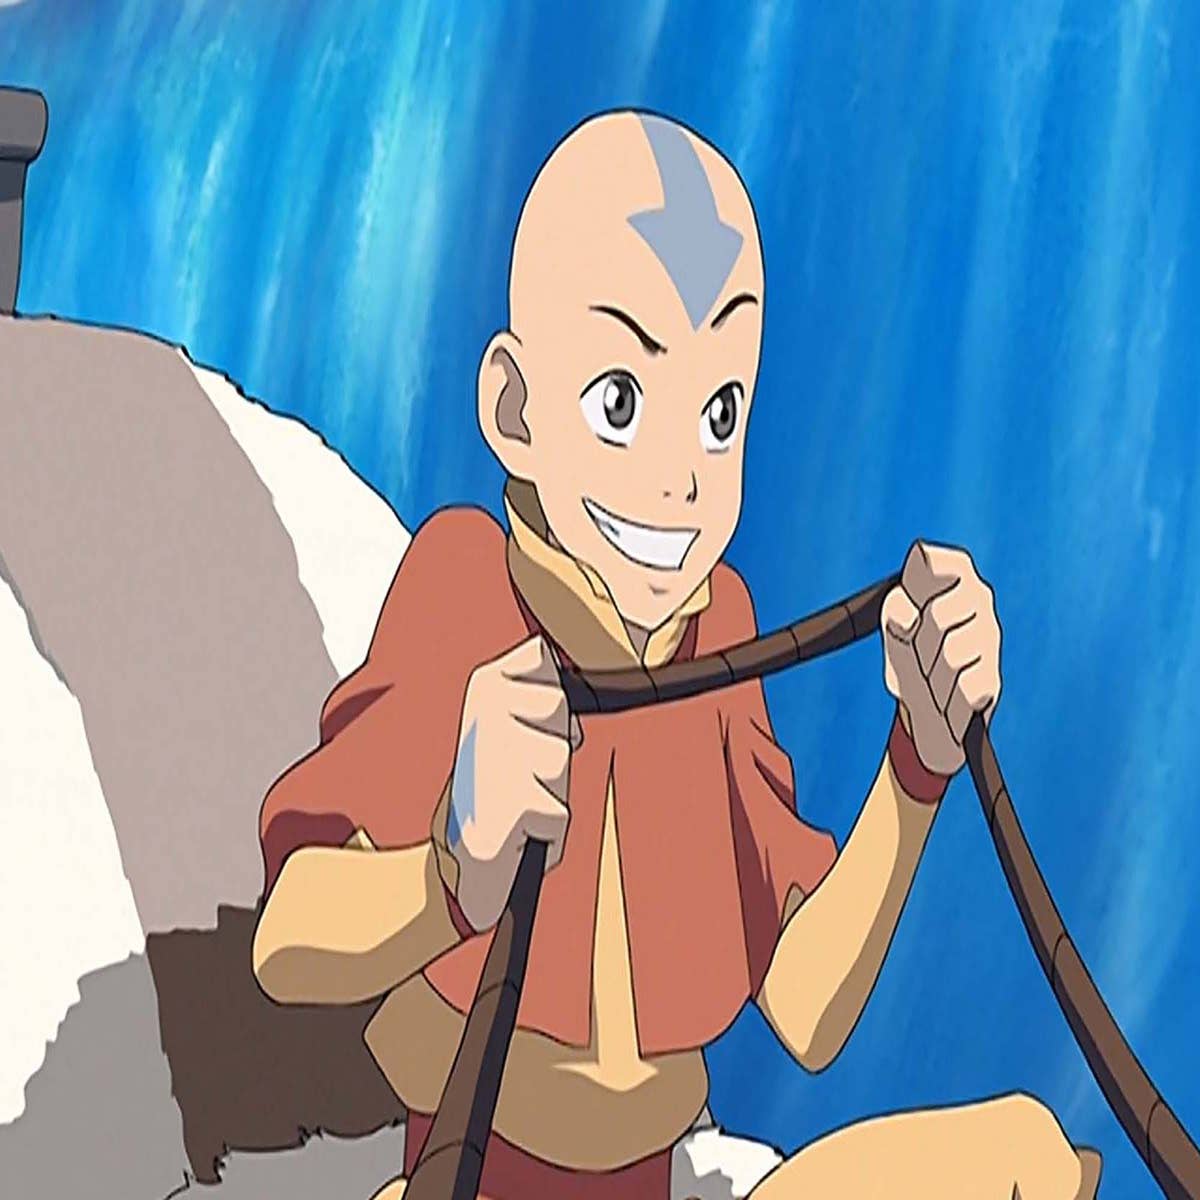 Watch Avatar: The Last Airbender season 3 episode 17 streaming online